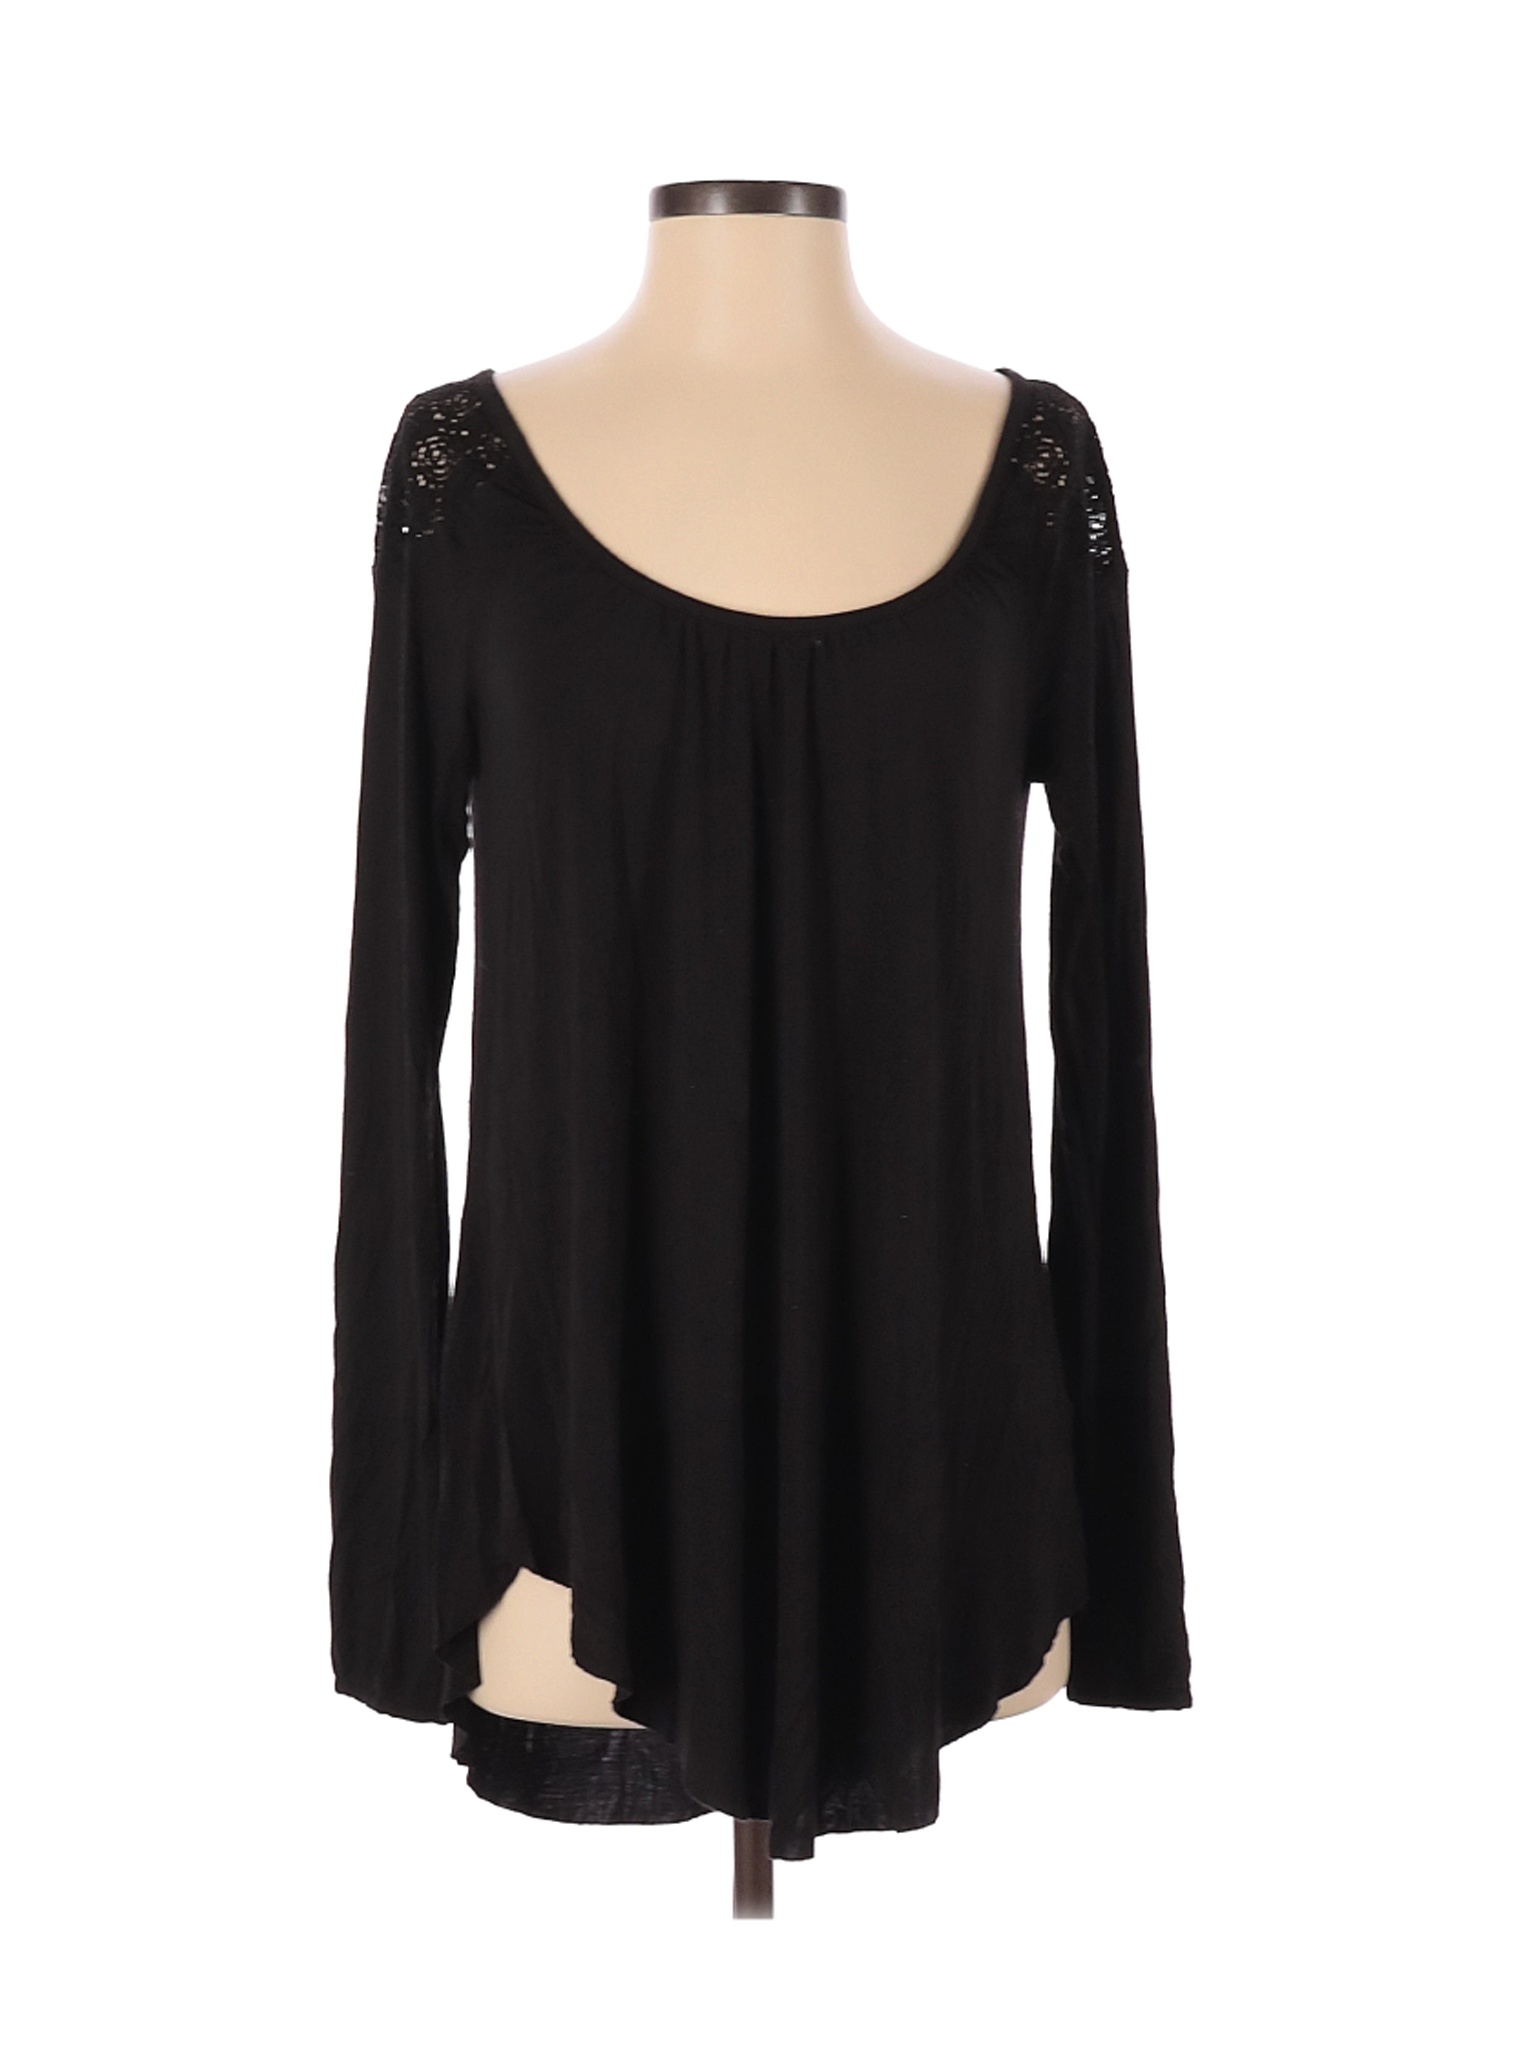 Maurices Women Black Long Sleeve Top S | eBay